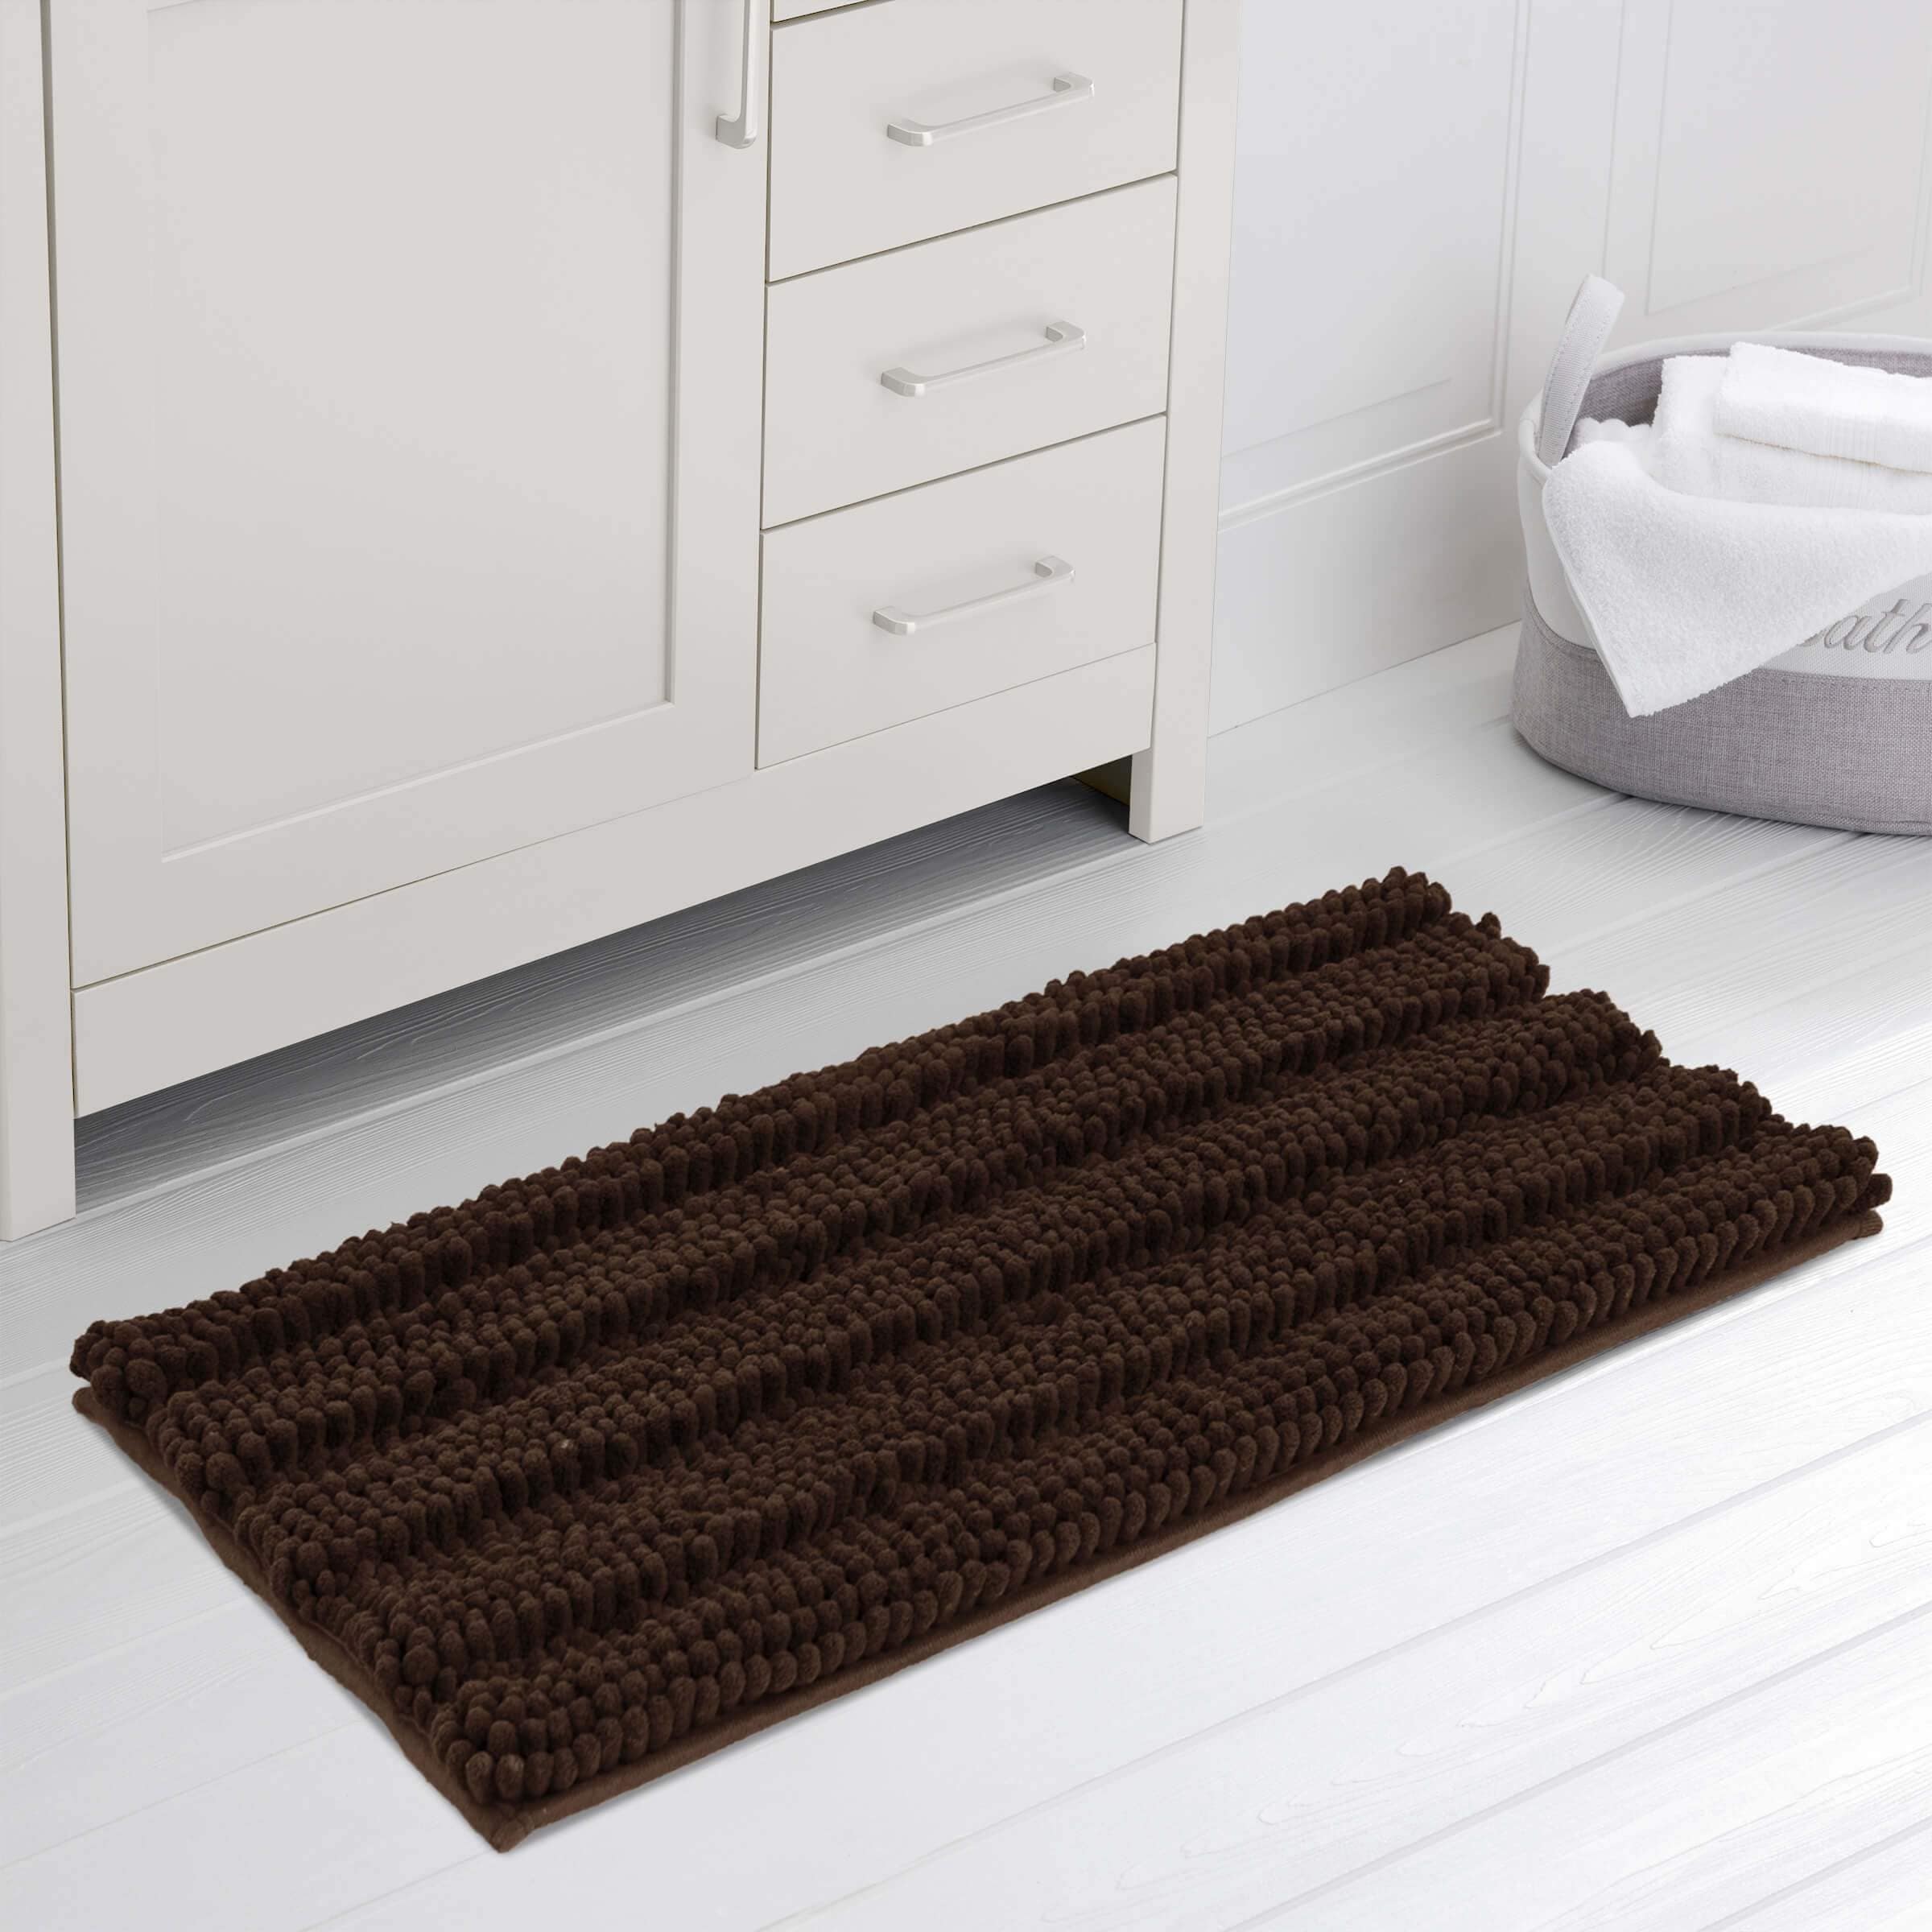 Subrtex Non-Slip Bathroom Rugs Chenille Soft Striped Plush Bath Mat (Taupe Brown, 18 inch x 48 inch)